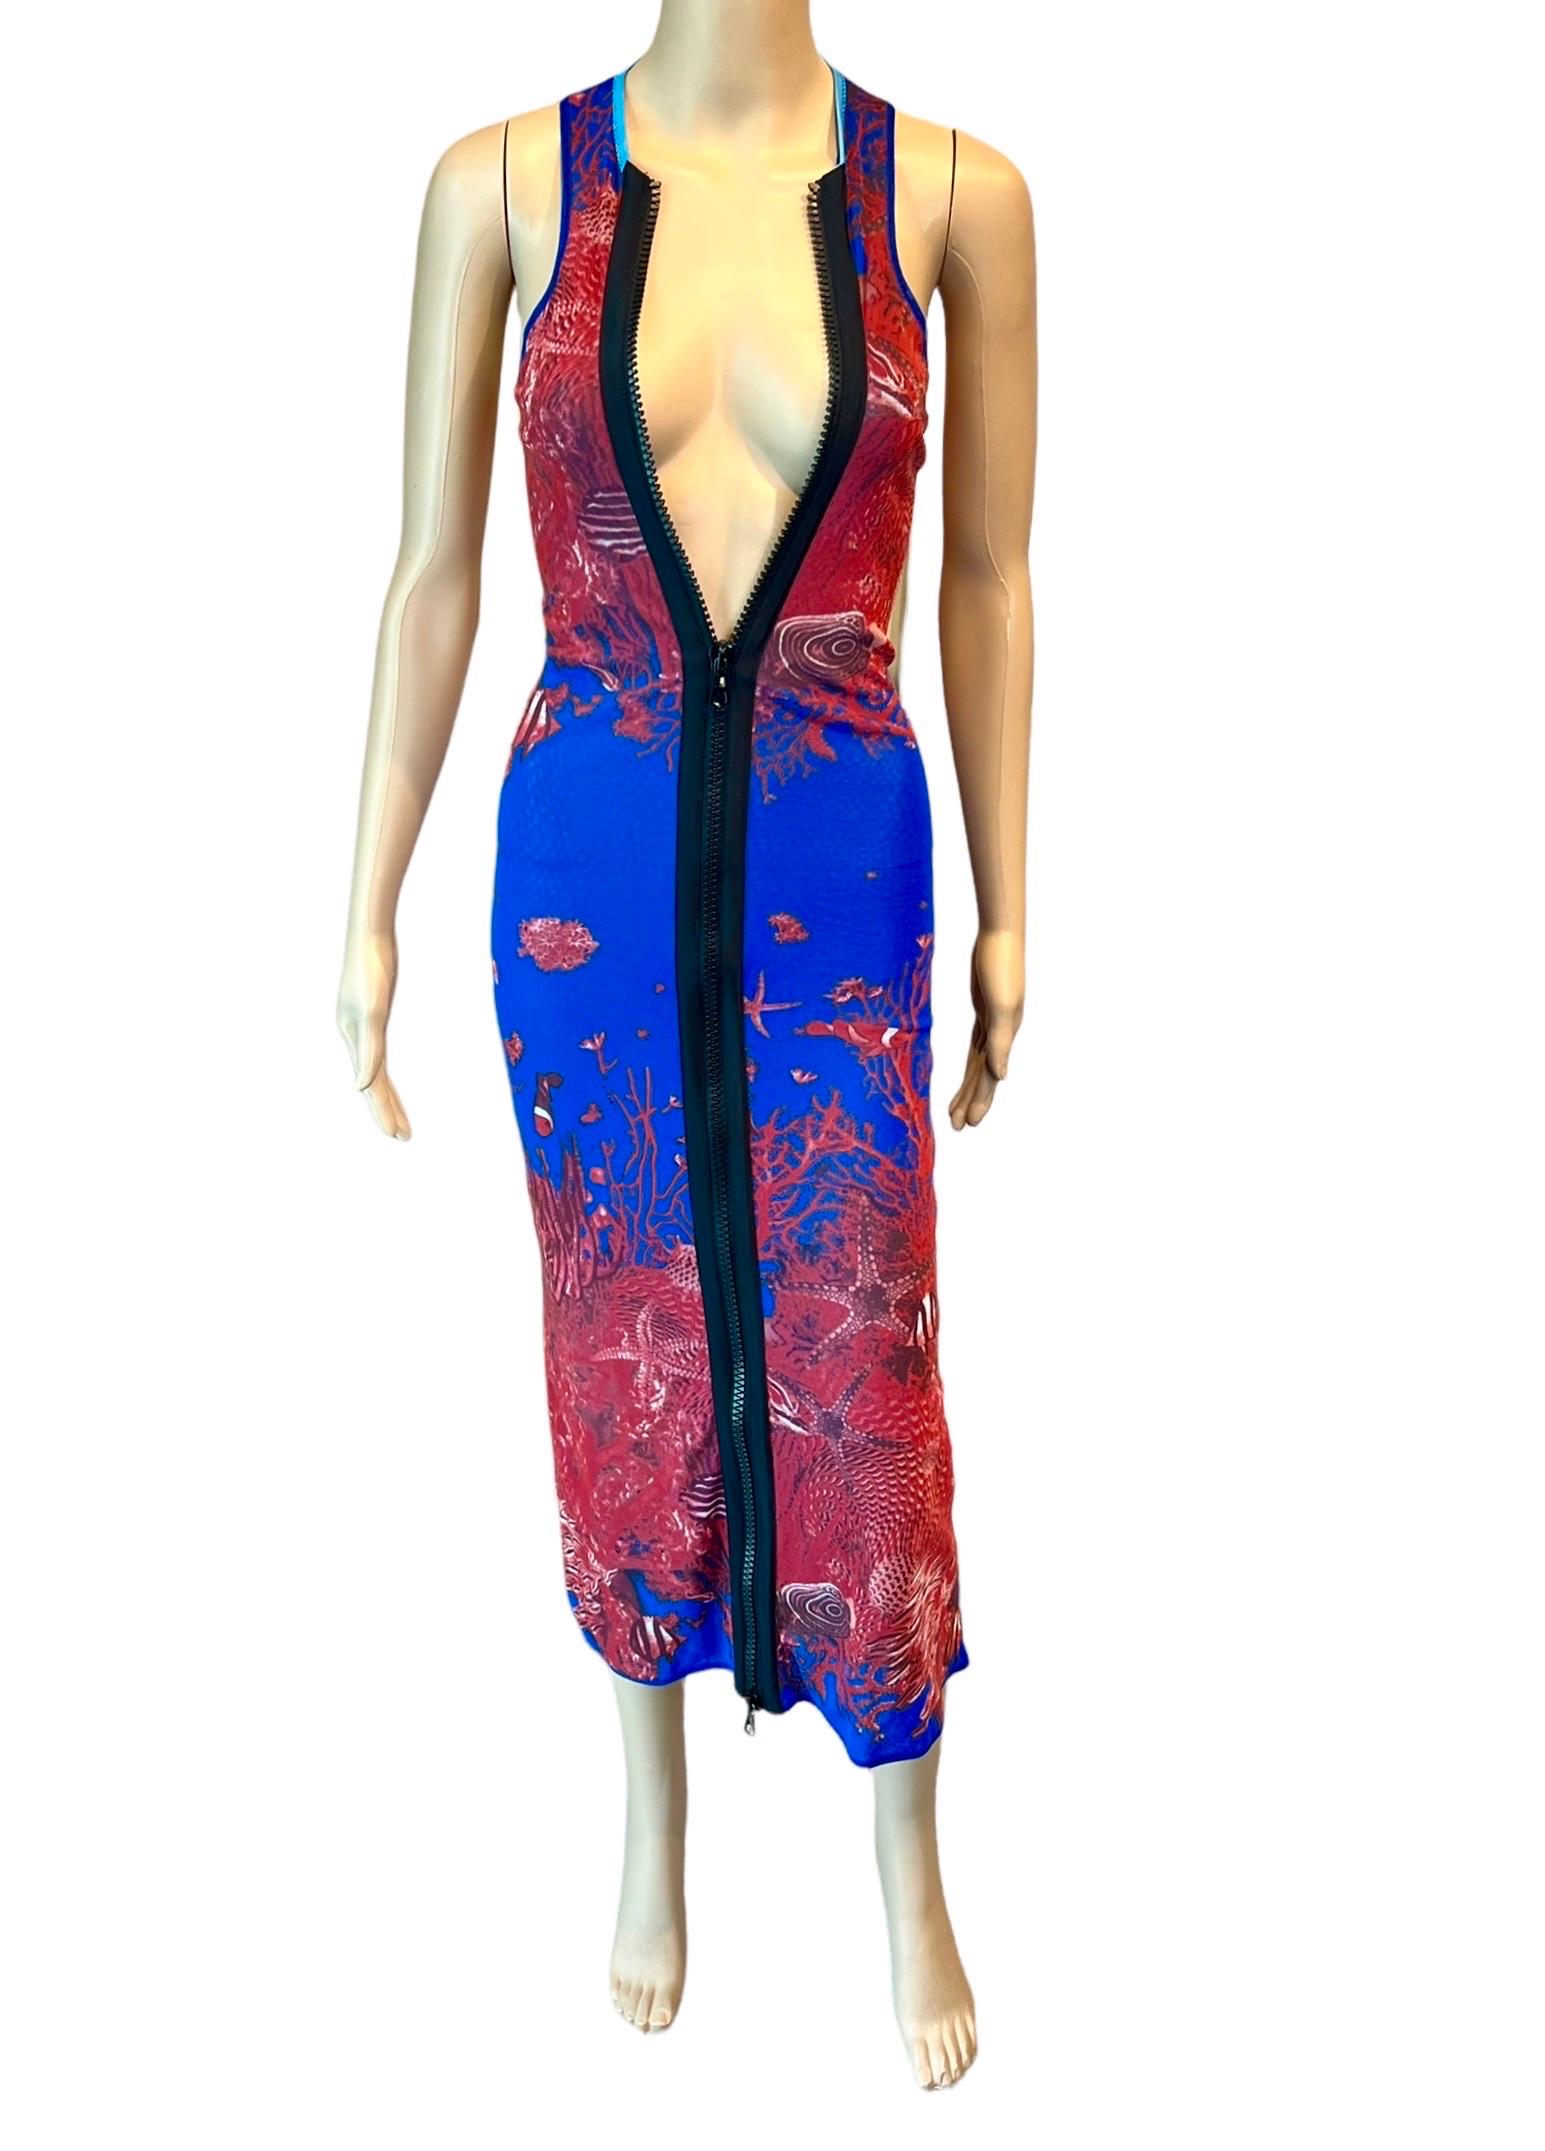 Jean Paul Gaultier Soleil S/S 1999 Sea Life Print Bodycon Zipper Mesh Maxi Dress For Sale 6